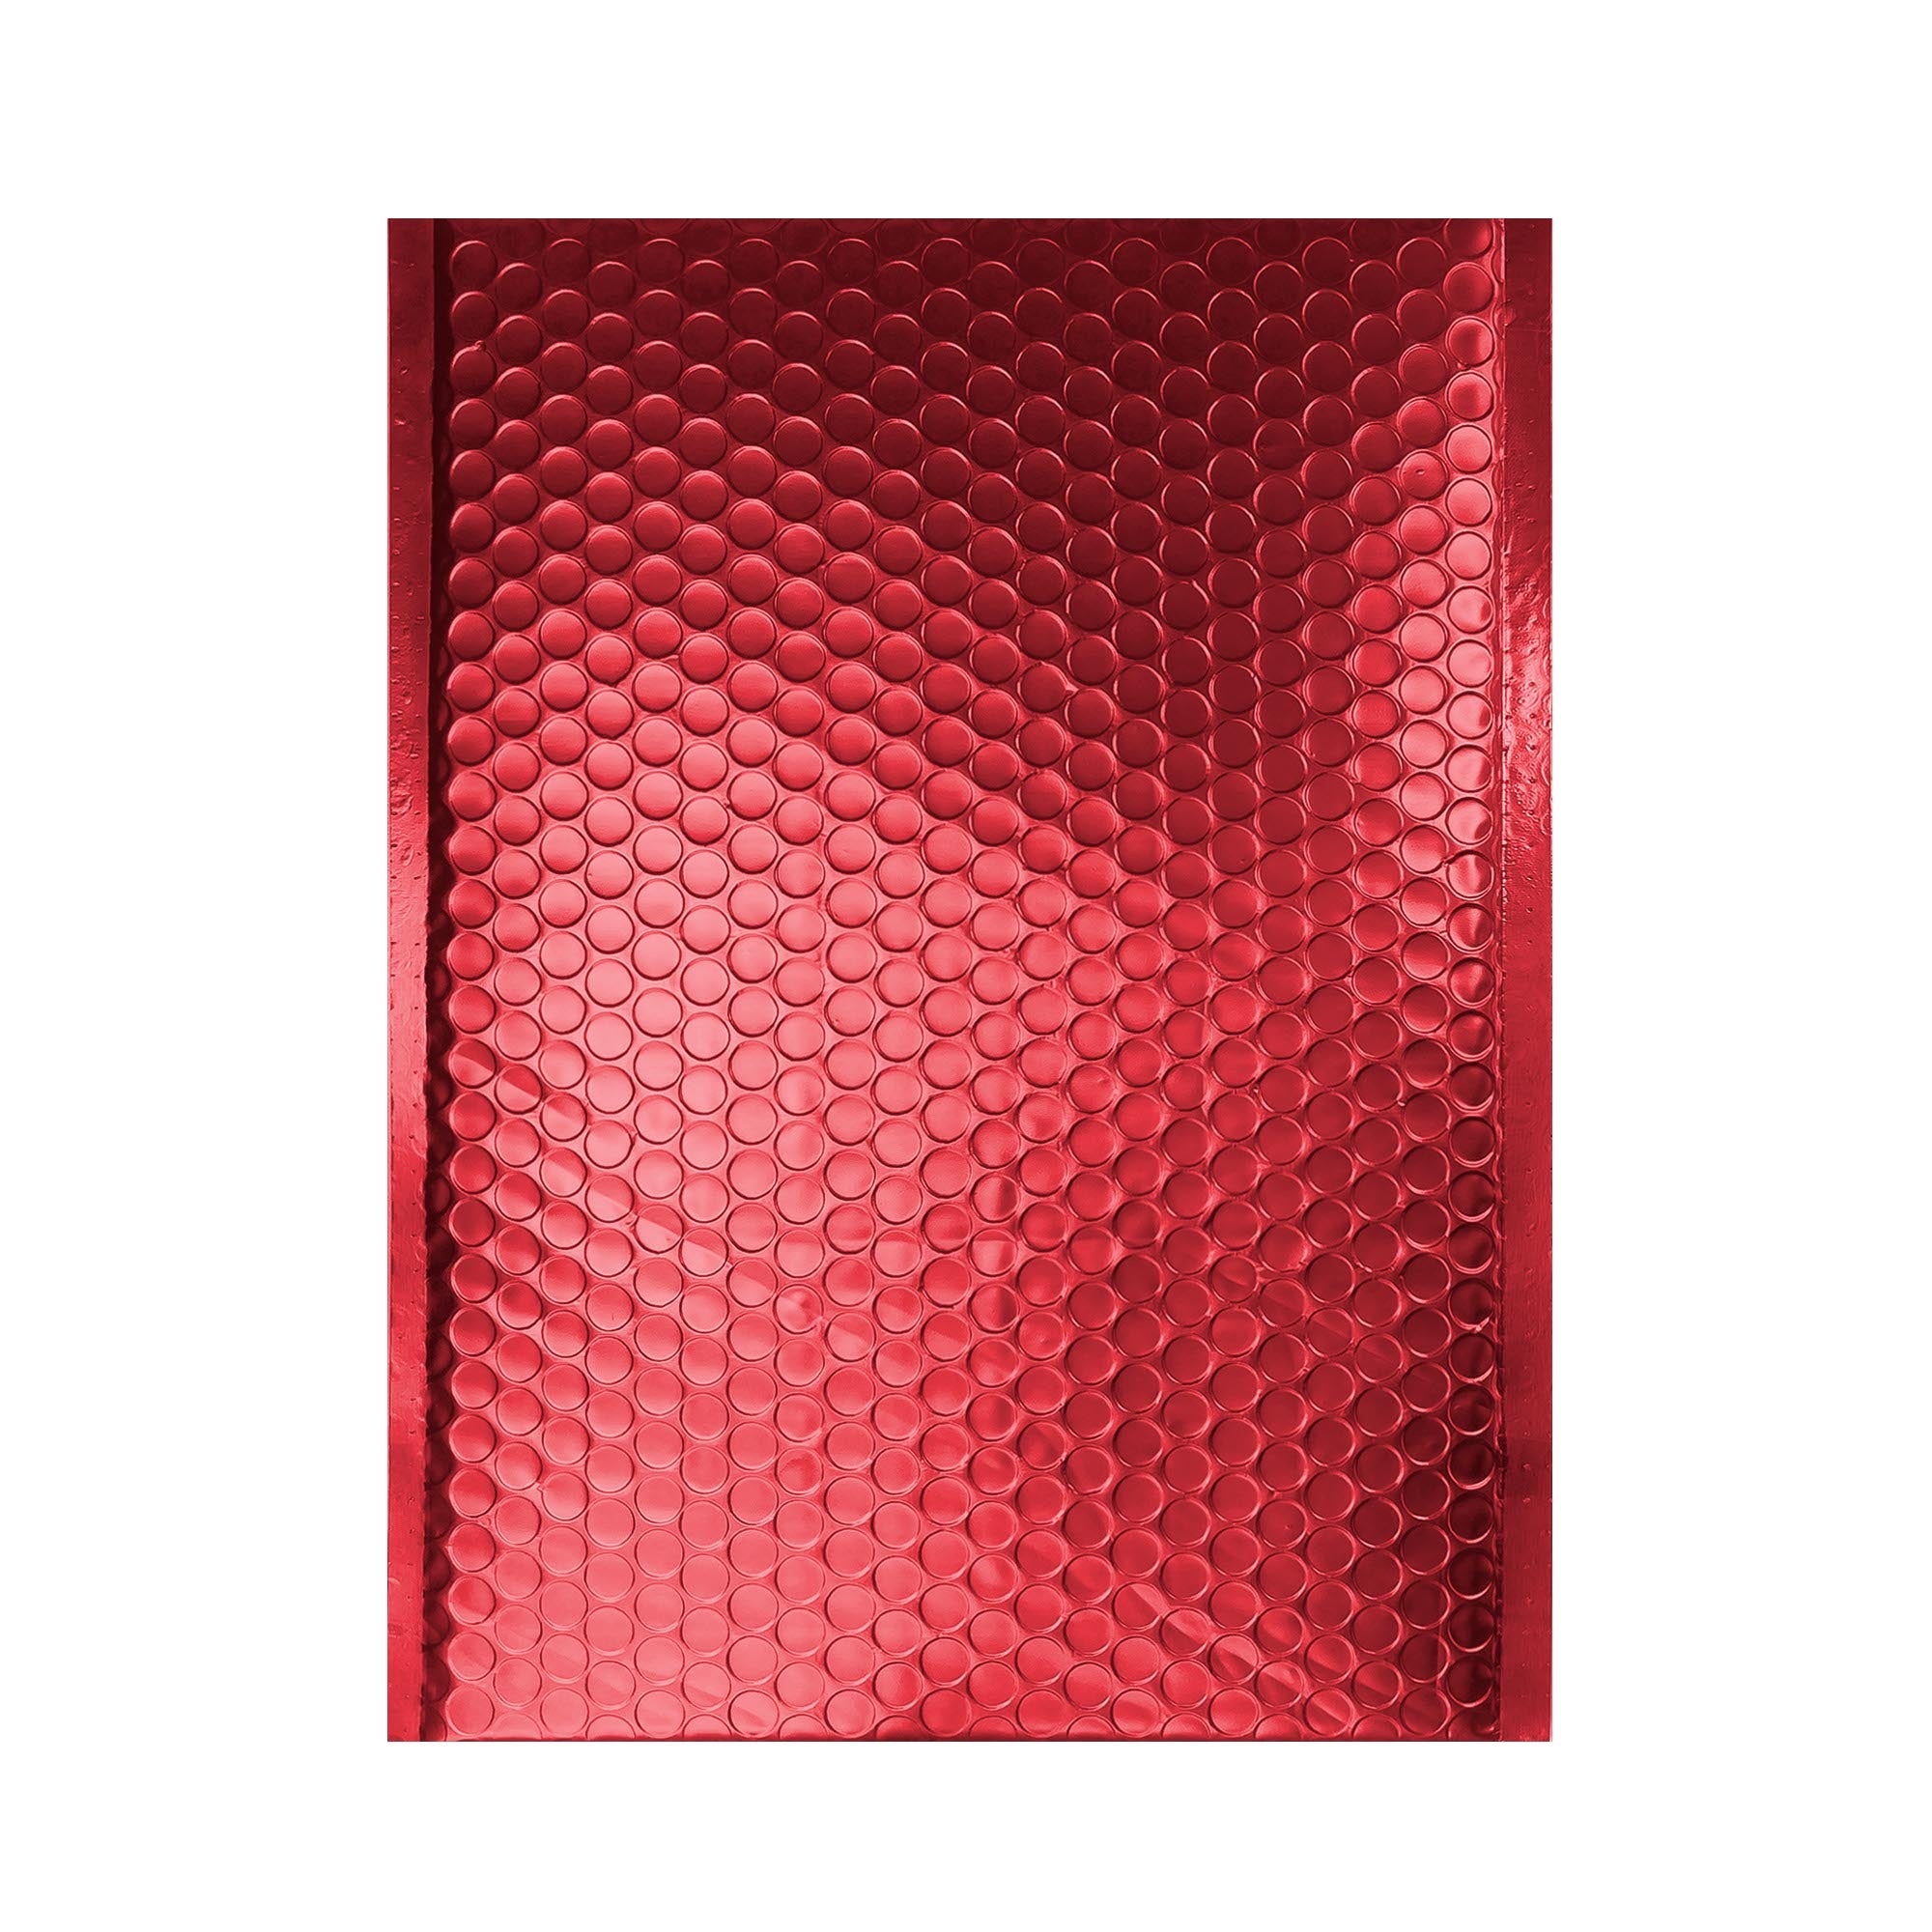 C3 Matt Pillar Box Red Padded Bubble Envelopes [Qty 50] 324 x 450mm - All Colour Envelopes